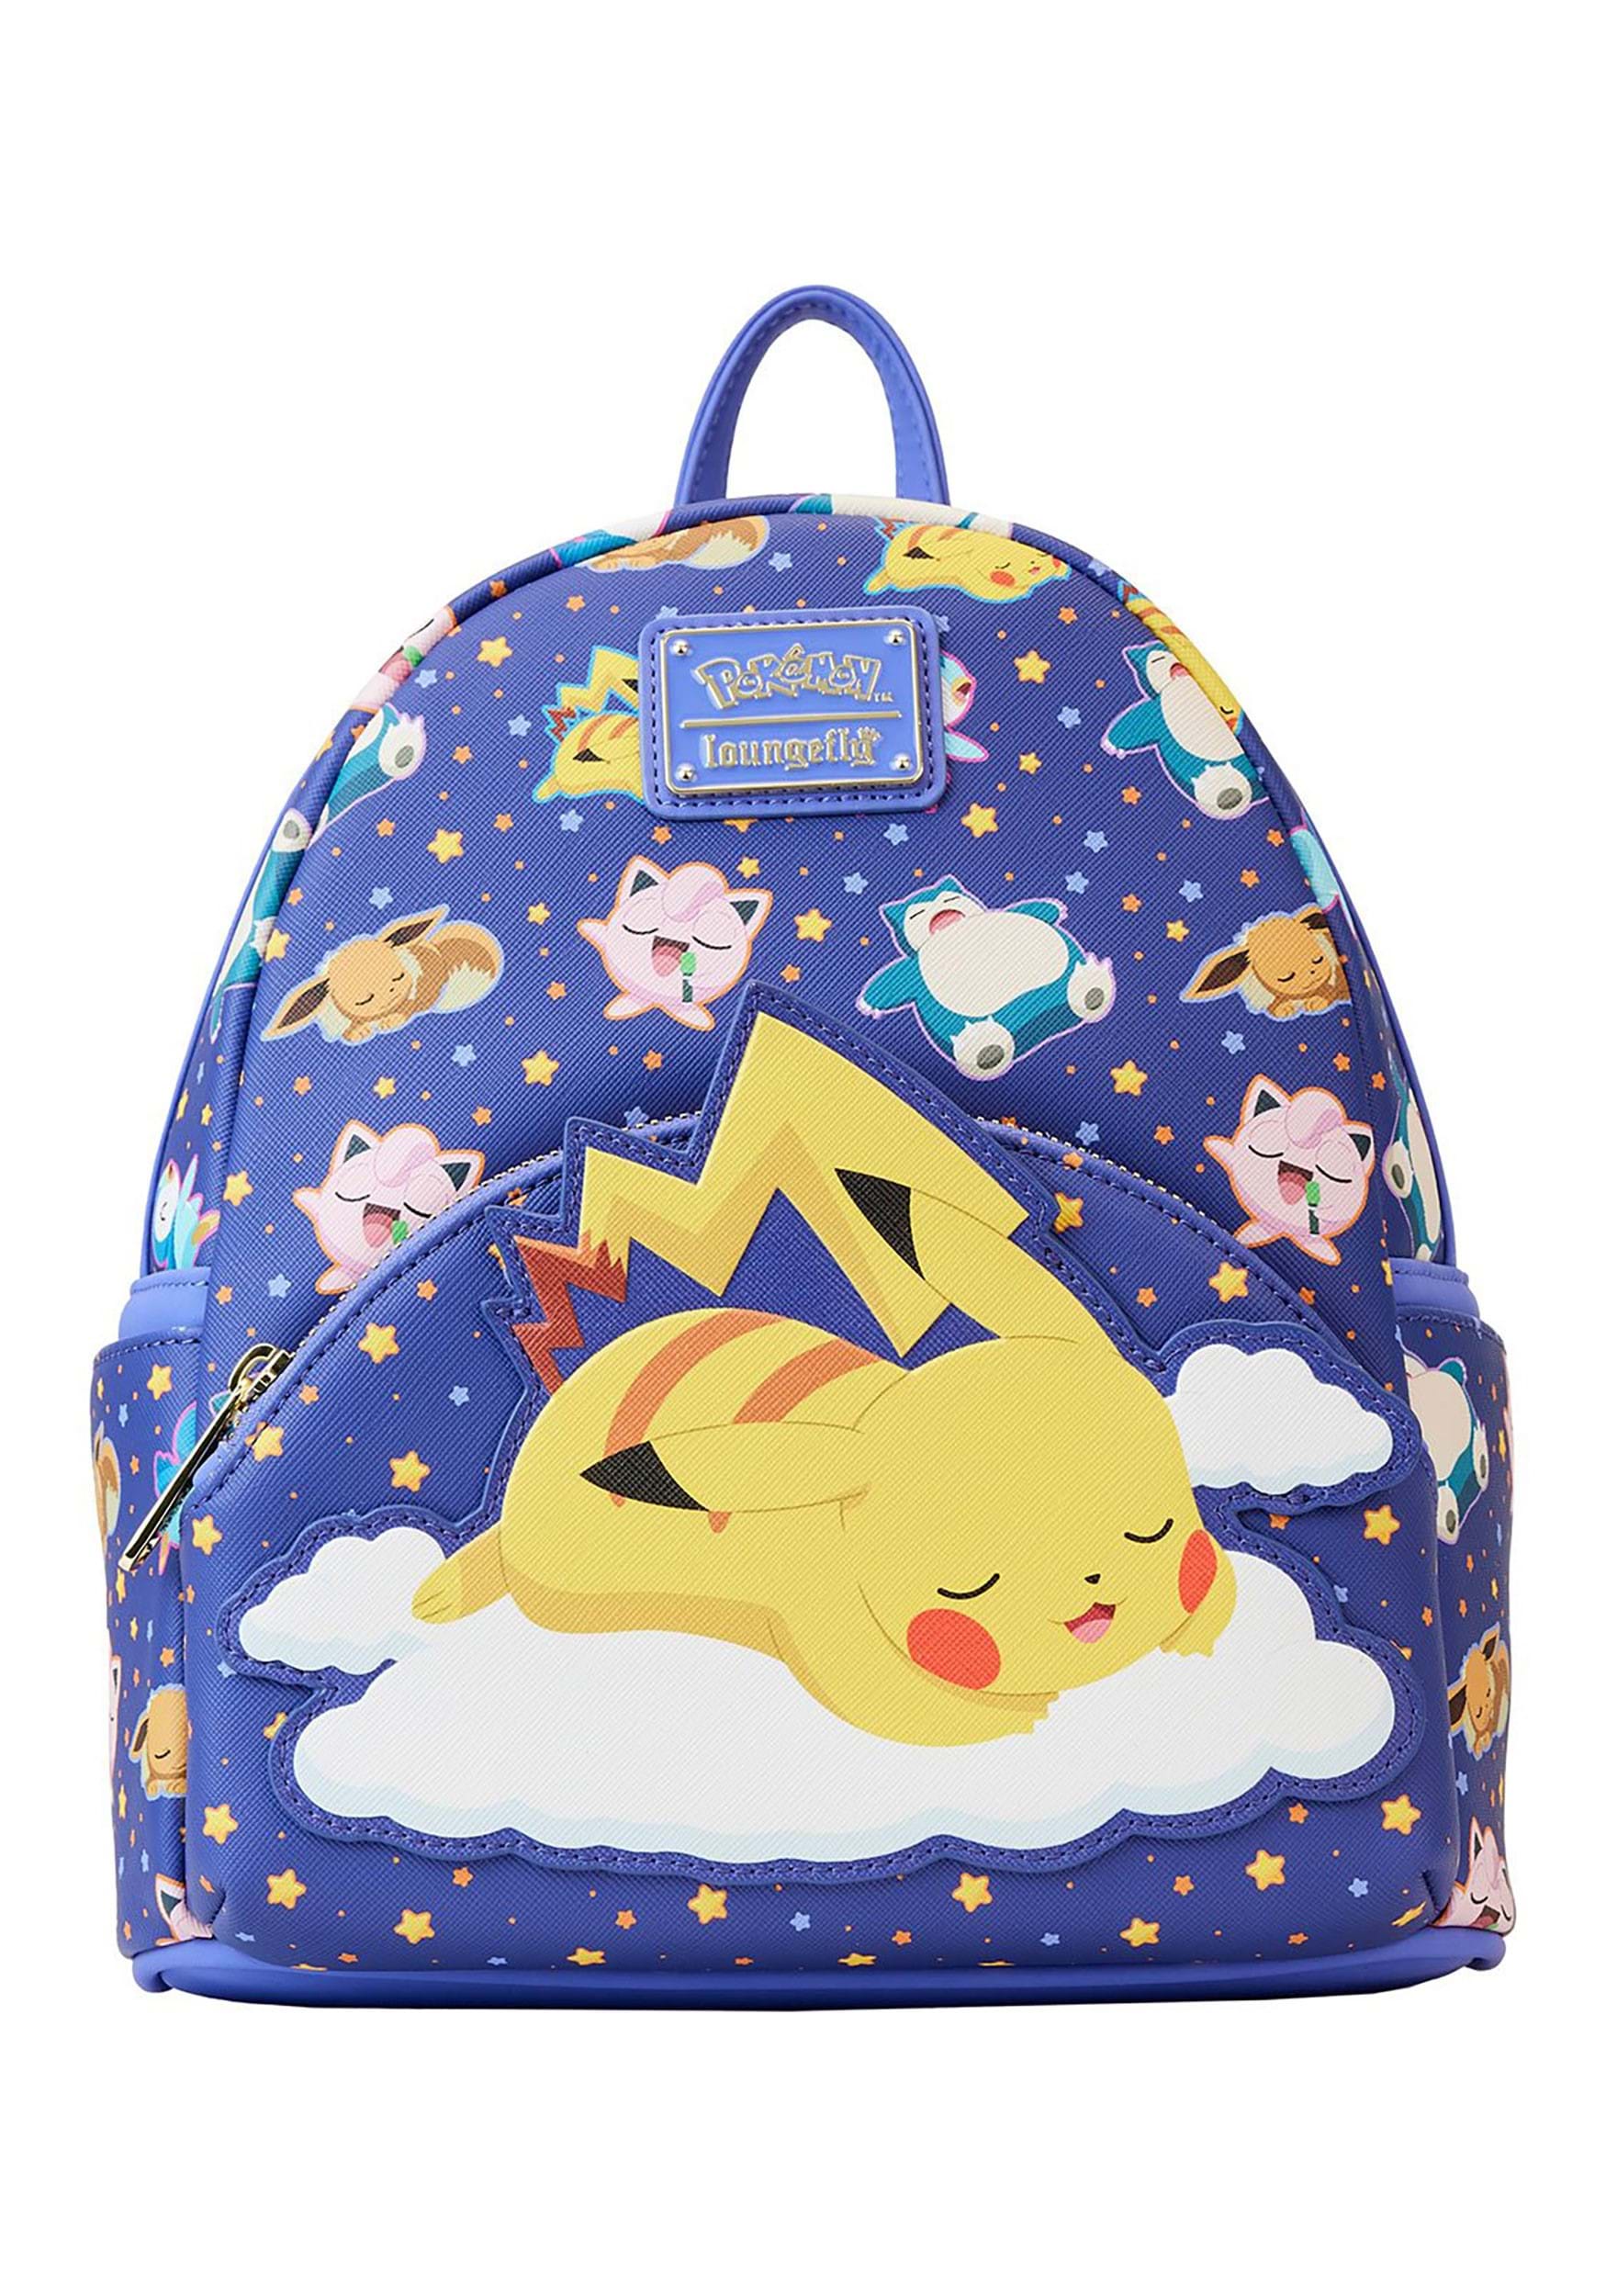 Pokémon Loungefly Sleeping Pikachu and Friends Mini Backpack